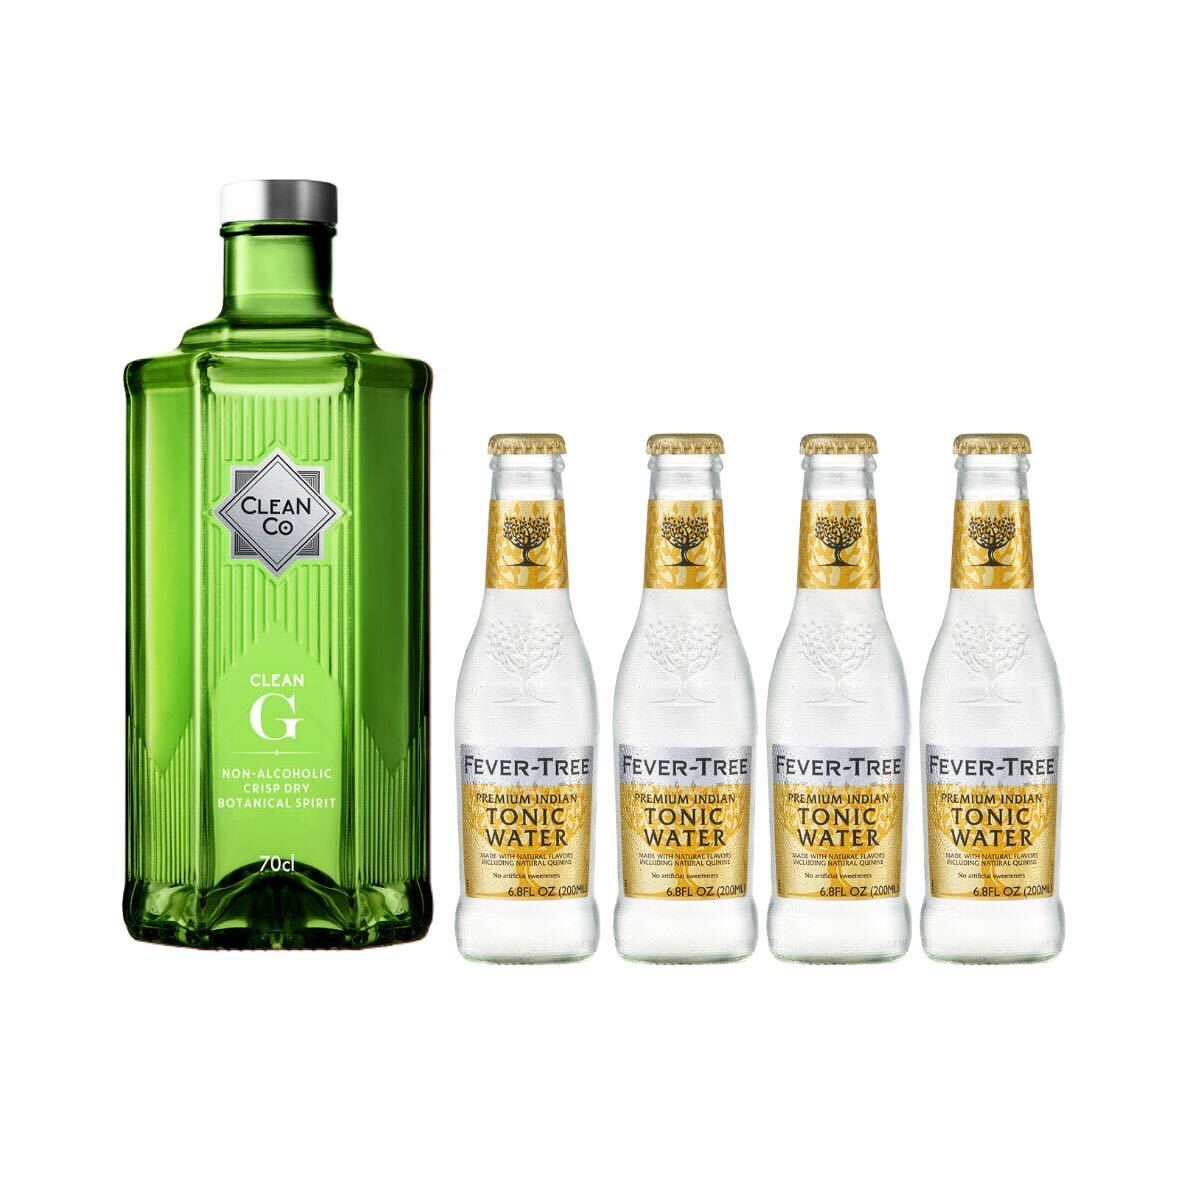 CleanCo Clean G Non Alcoholic Gin Alternative